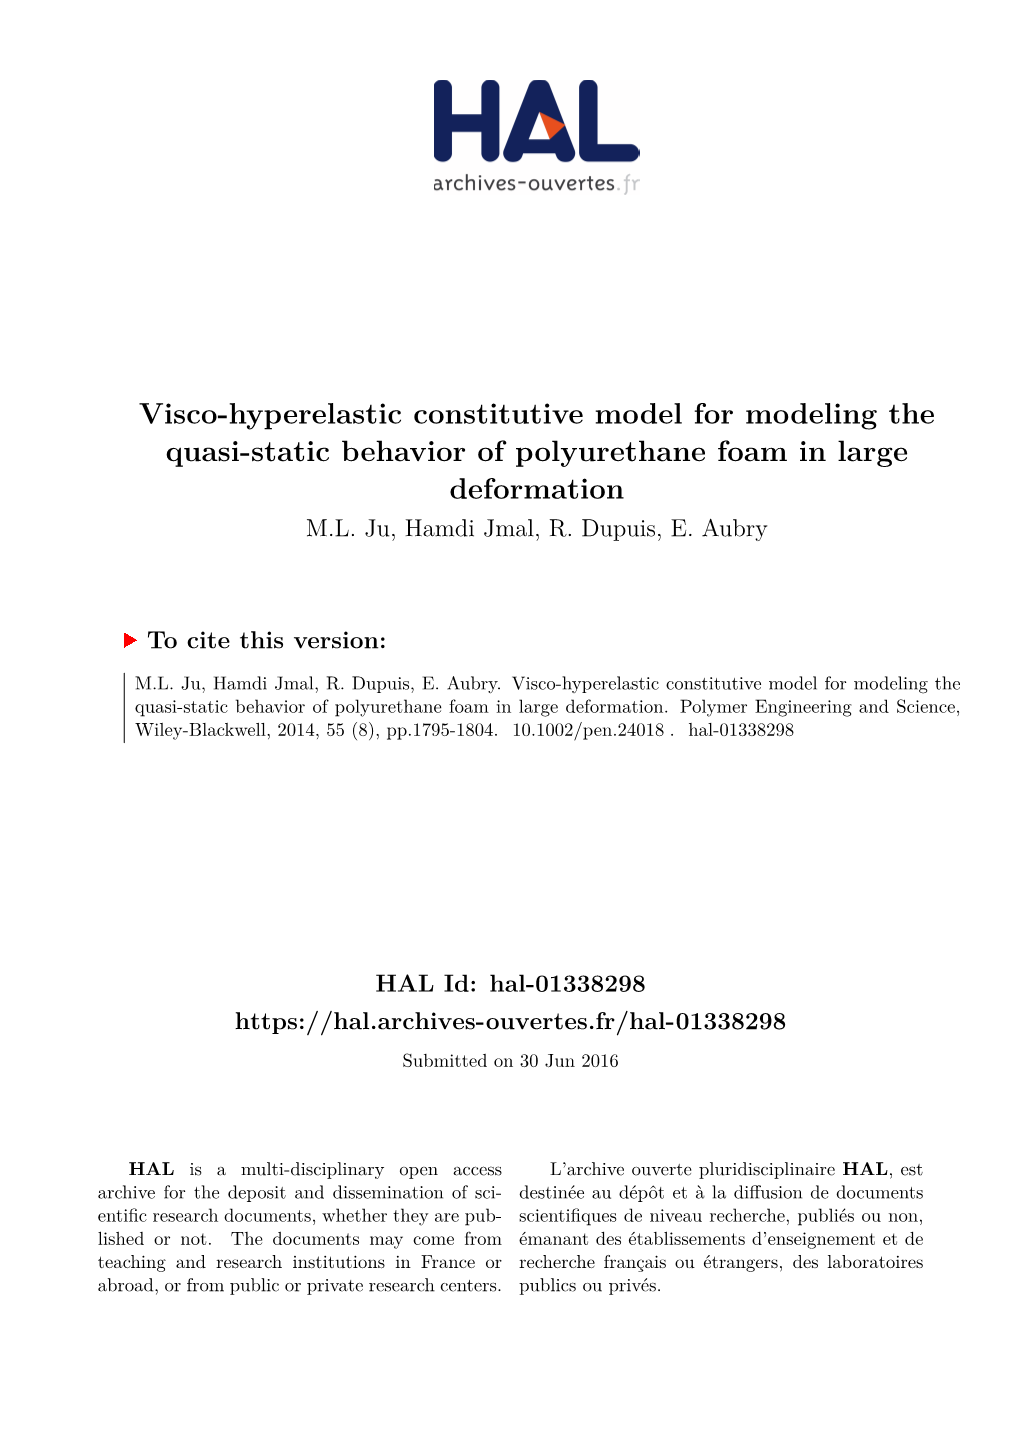 Visco-Hyperelastic Constitutive Model for Modeling the Quasi-Static Behavior of Polyurethane Foam in Large Deformation M.L